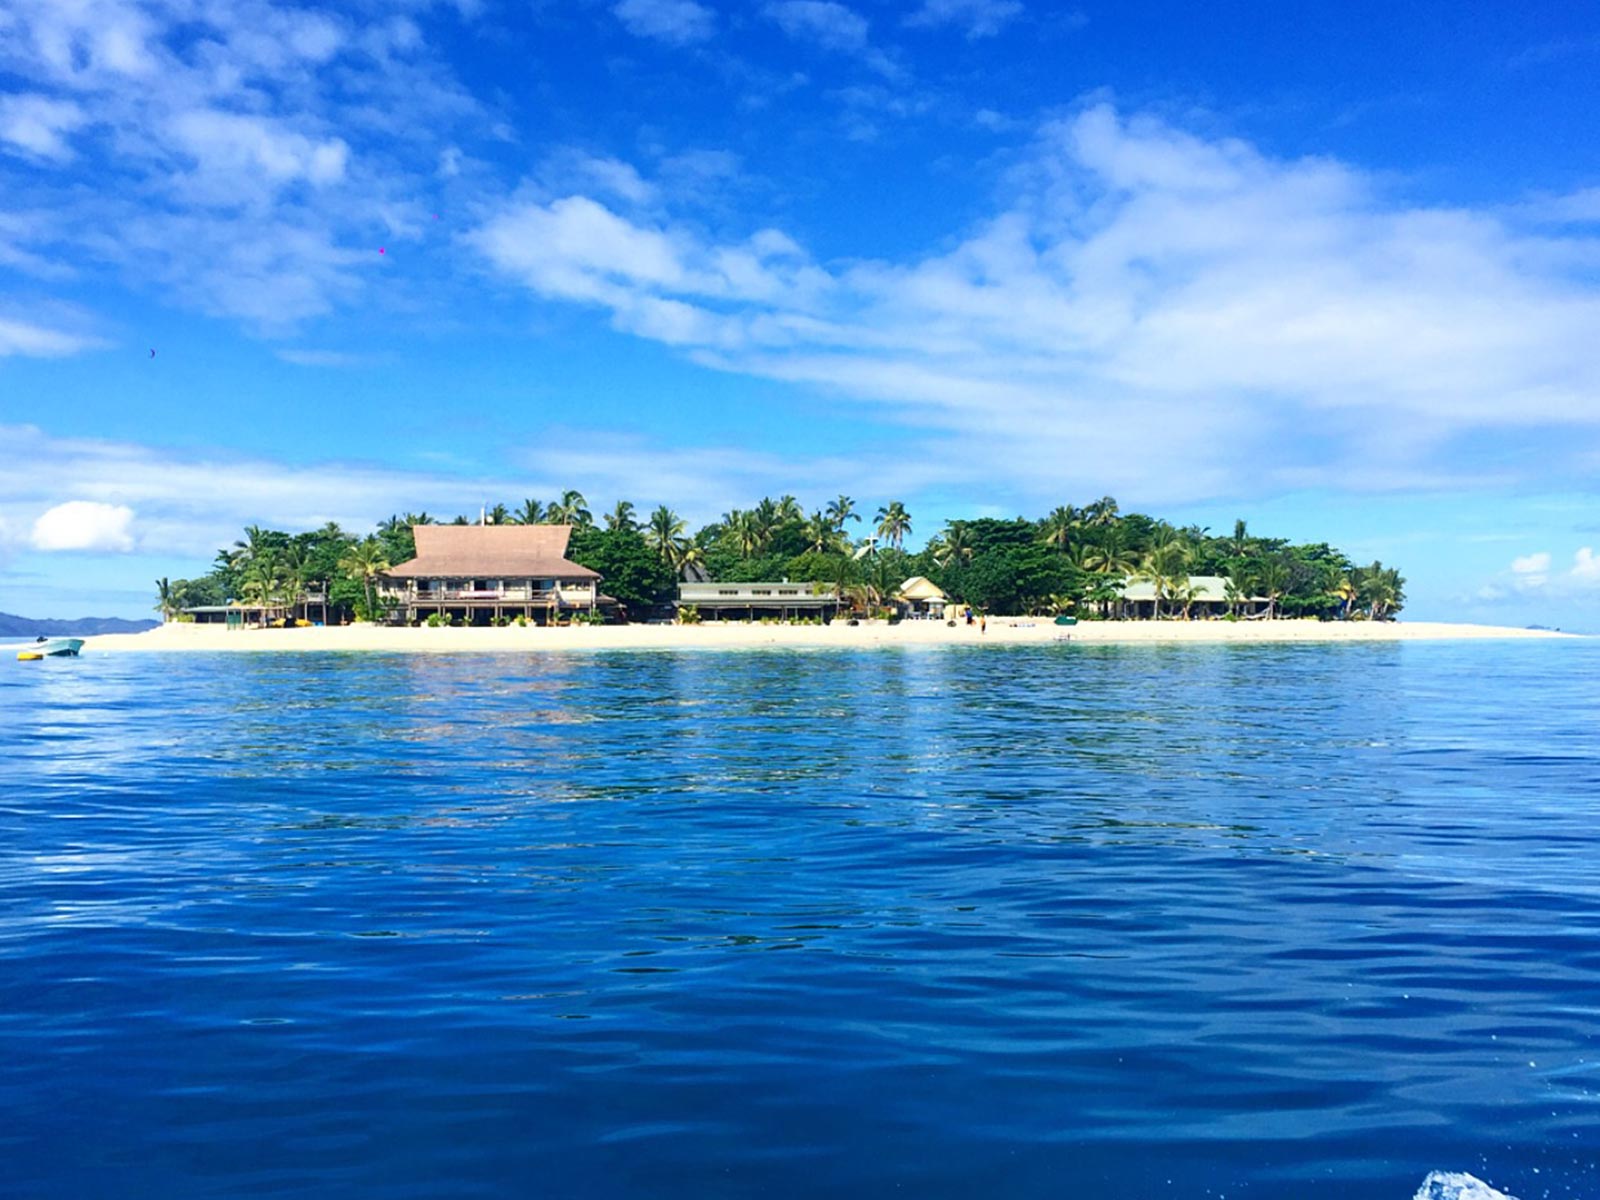 Beachcomber island in Fiji. Fiji reflection